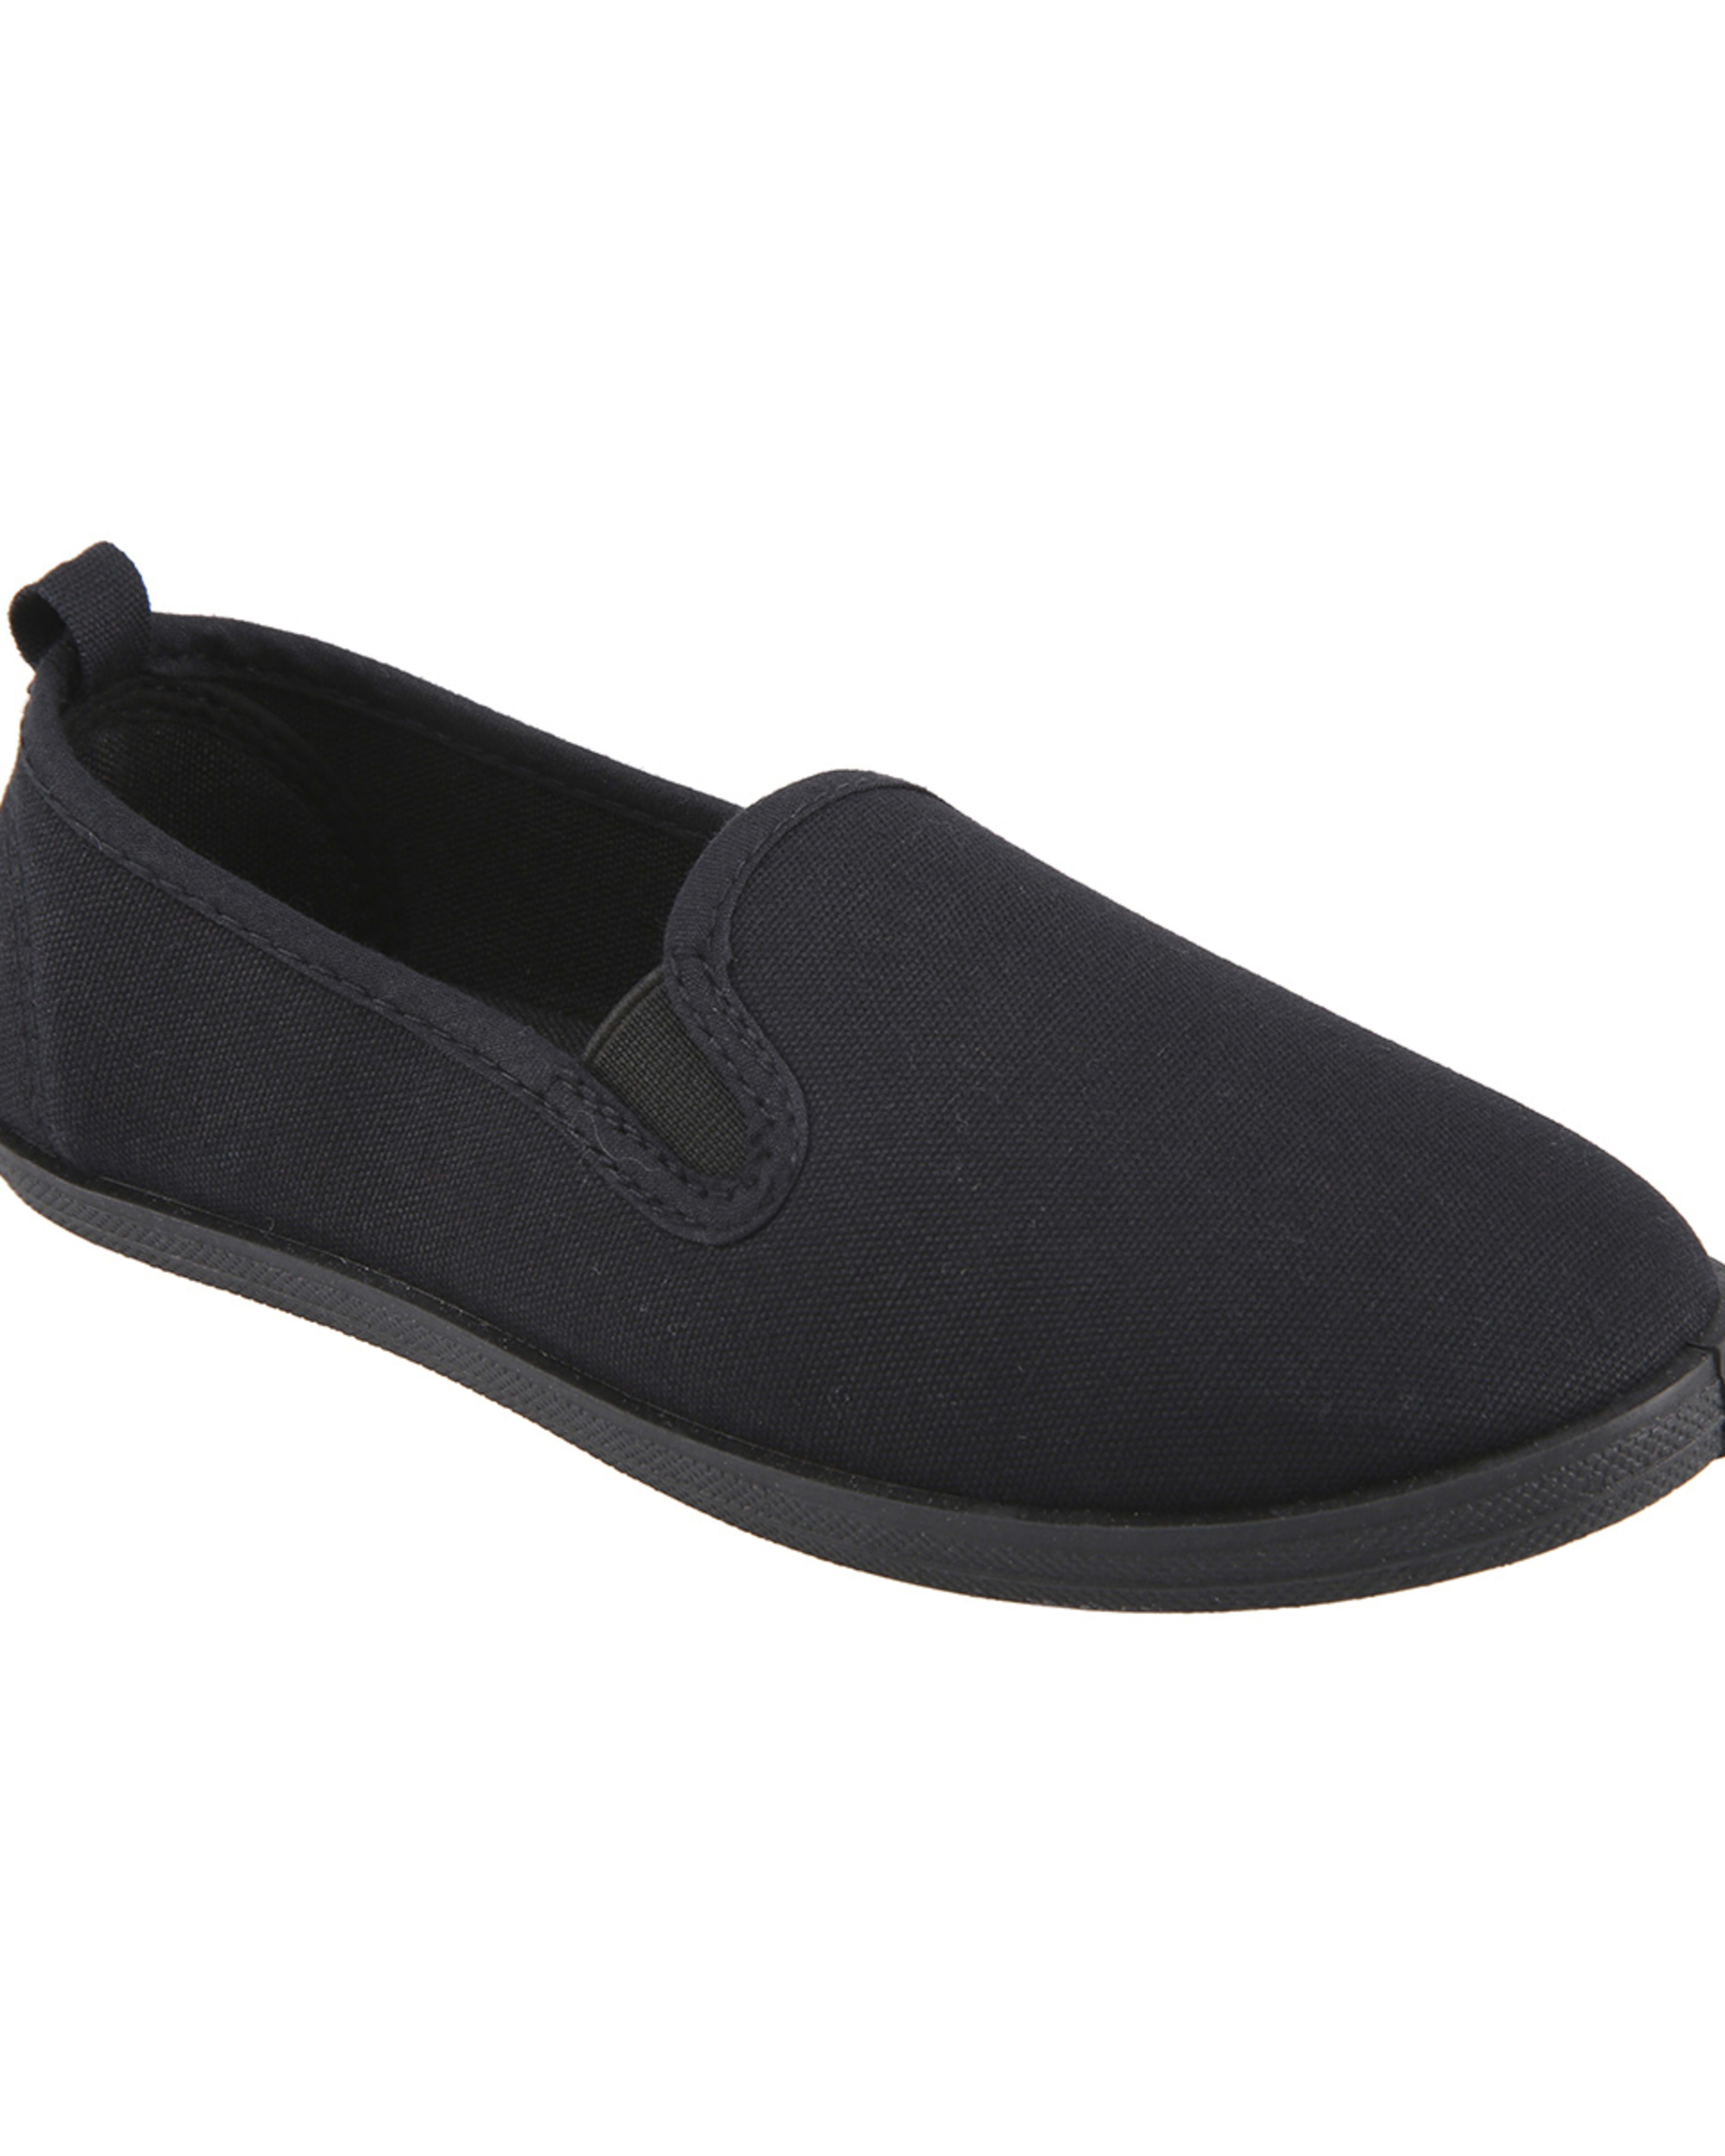 Junior Slip On Shoes - Kmart